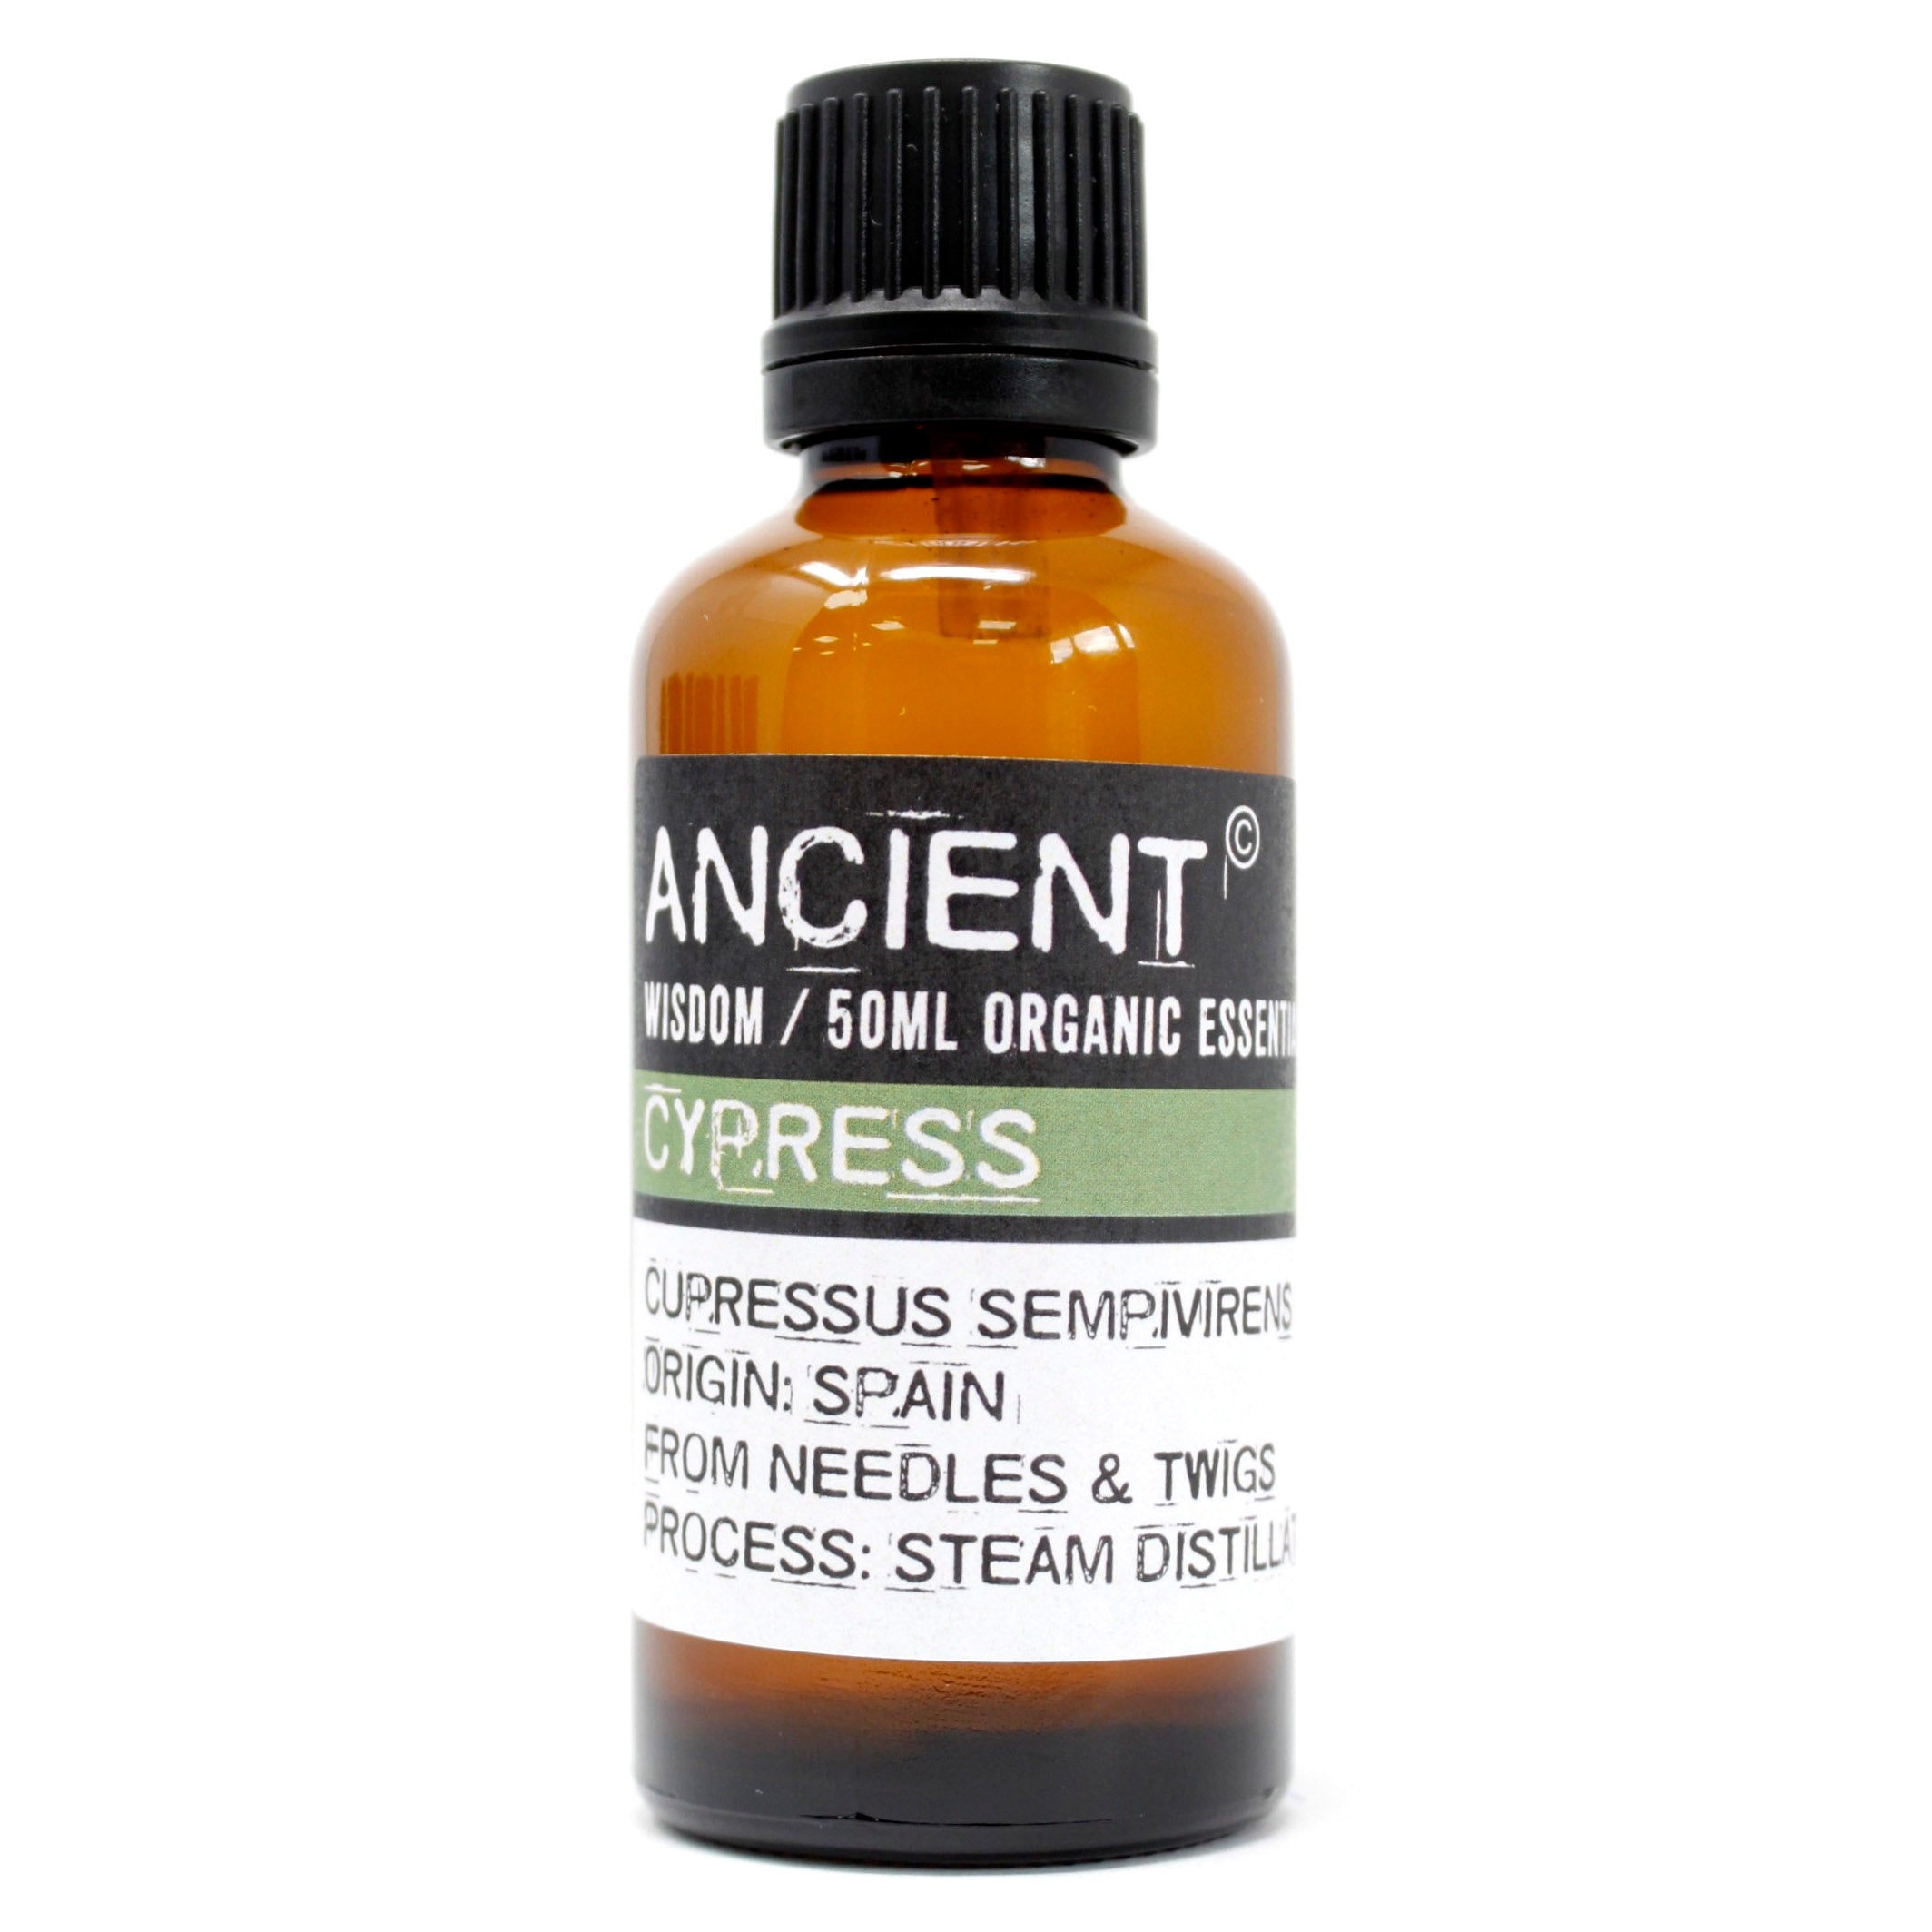 View Cypress Organic Essential Oil 50ml information